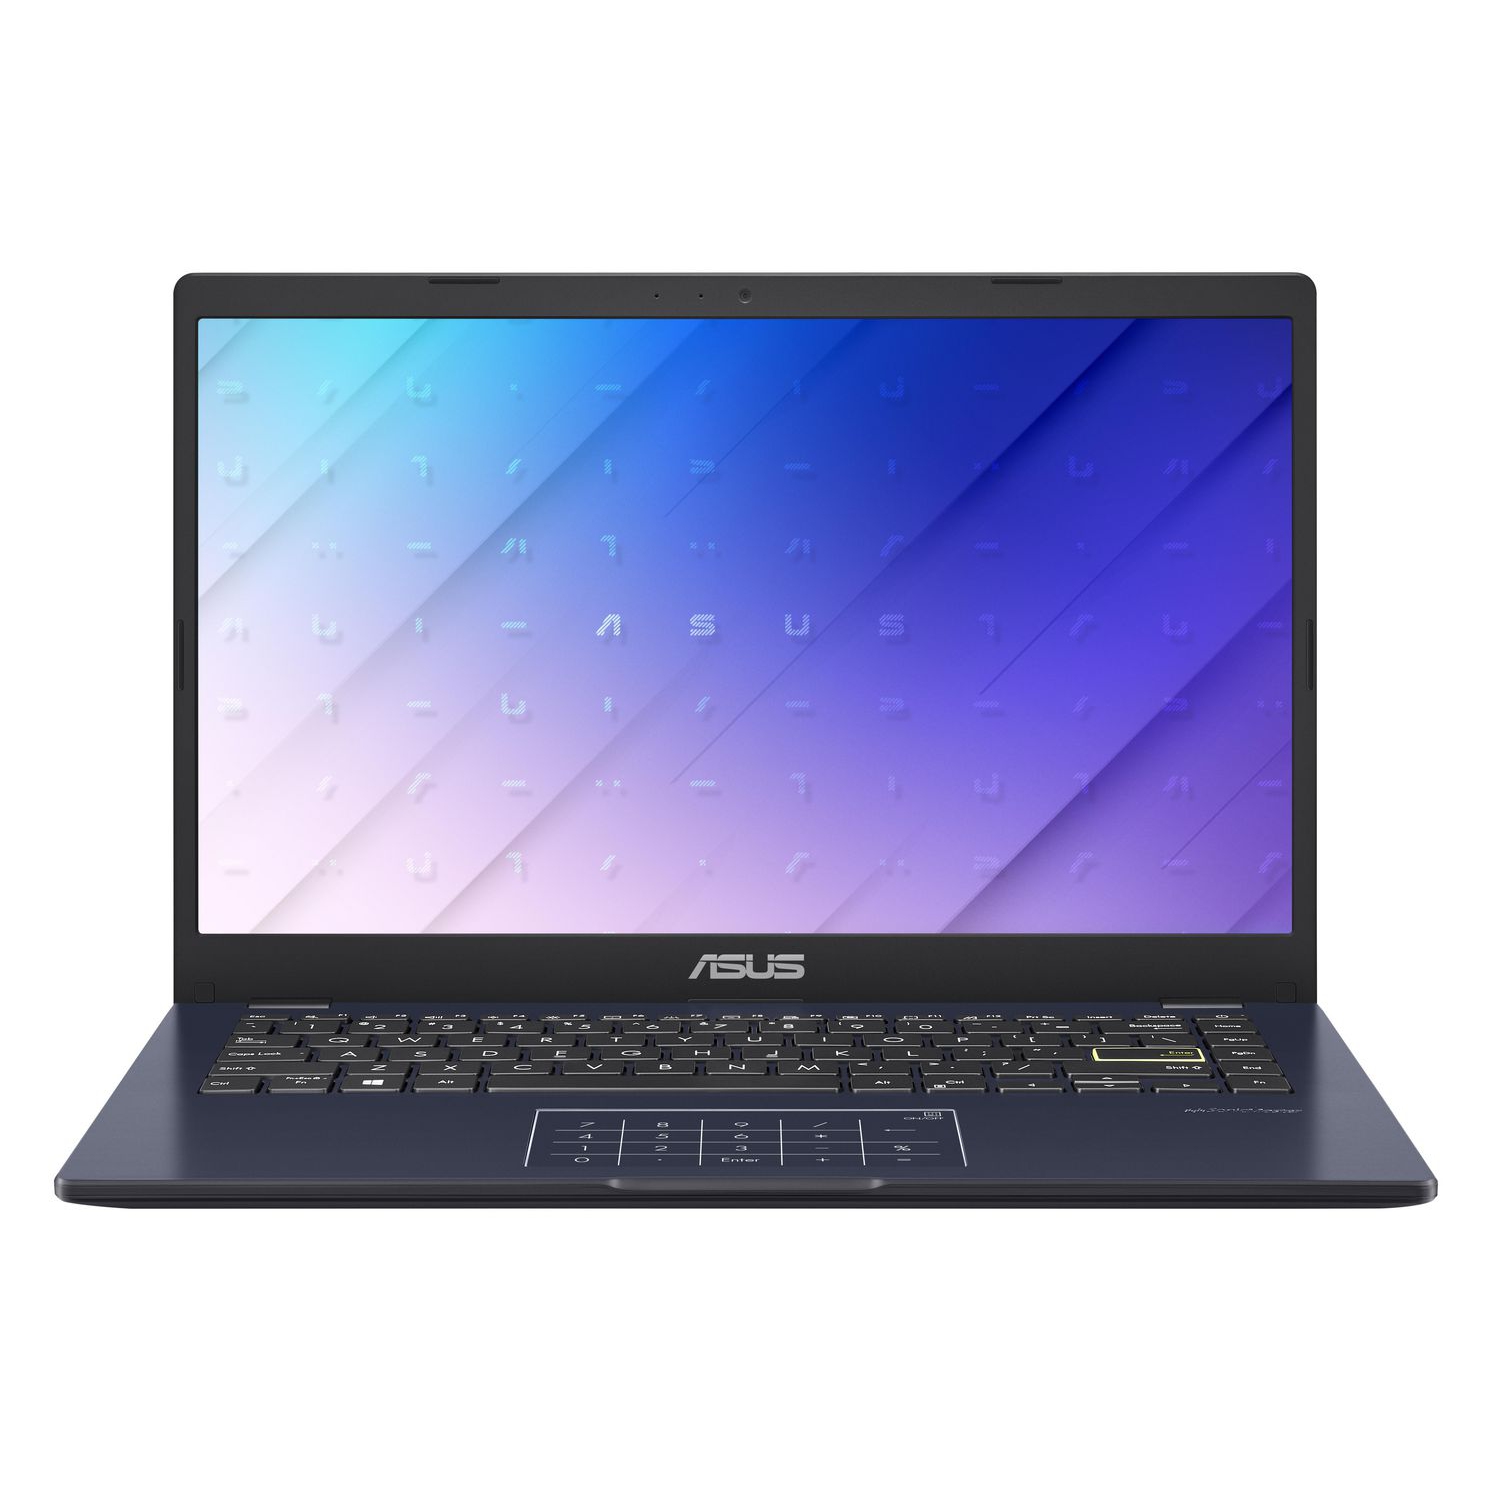 Refurbished (Excellent) - Asus Vivobook L410MA-WS01-CB 14" FHD Laptop Intel Celeron N4020 1.1GHz Intel UHD Graphics 600 4GB RAM 64GB eMMC Win 10 Home Star Black